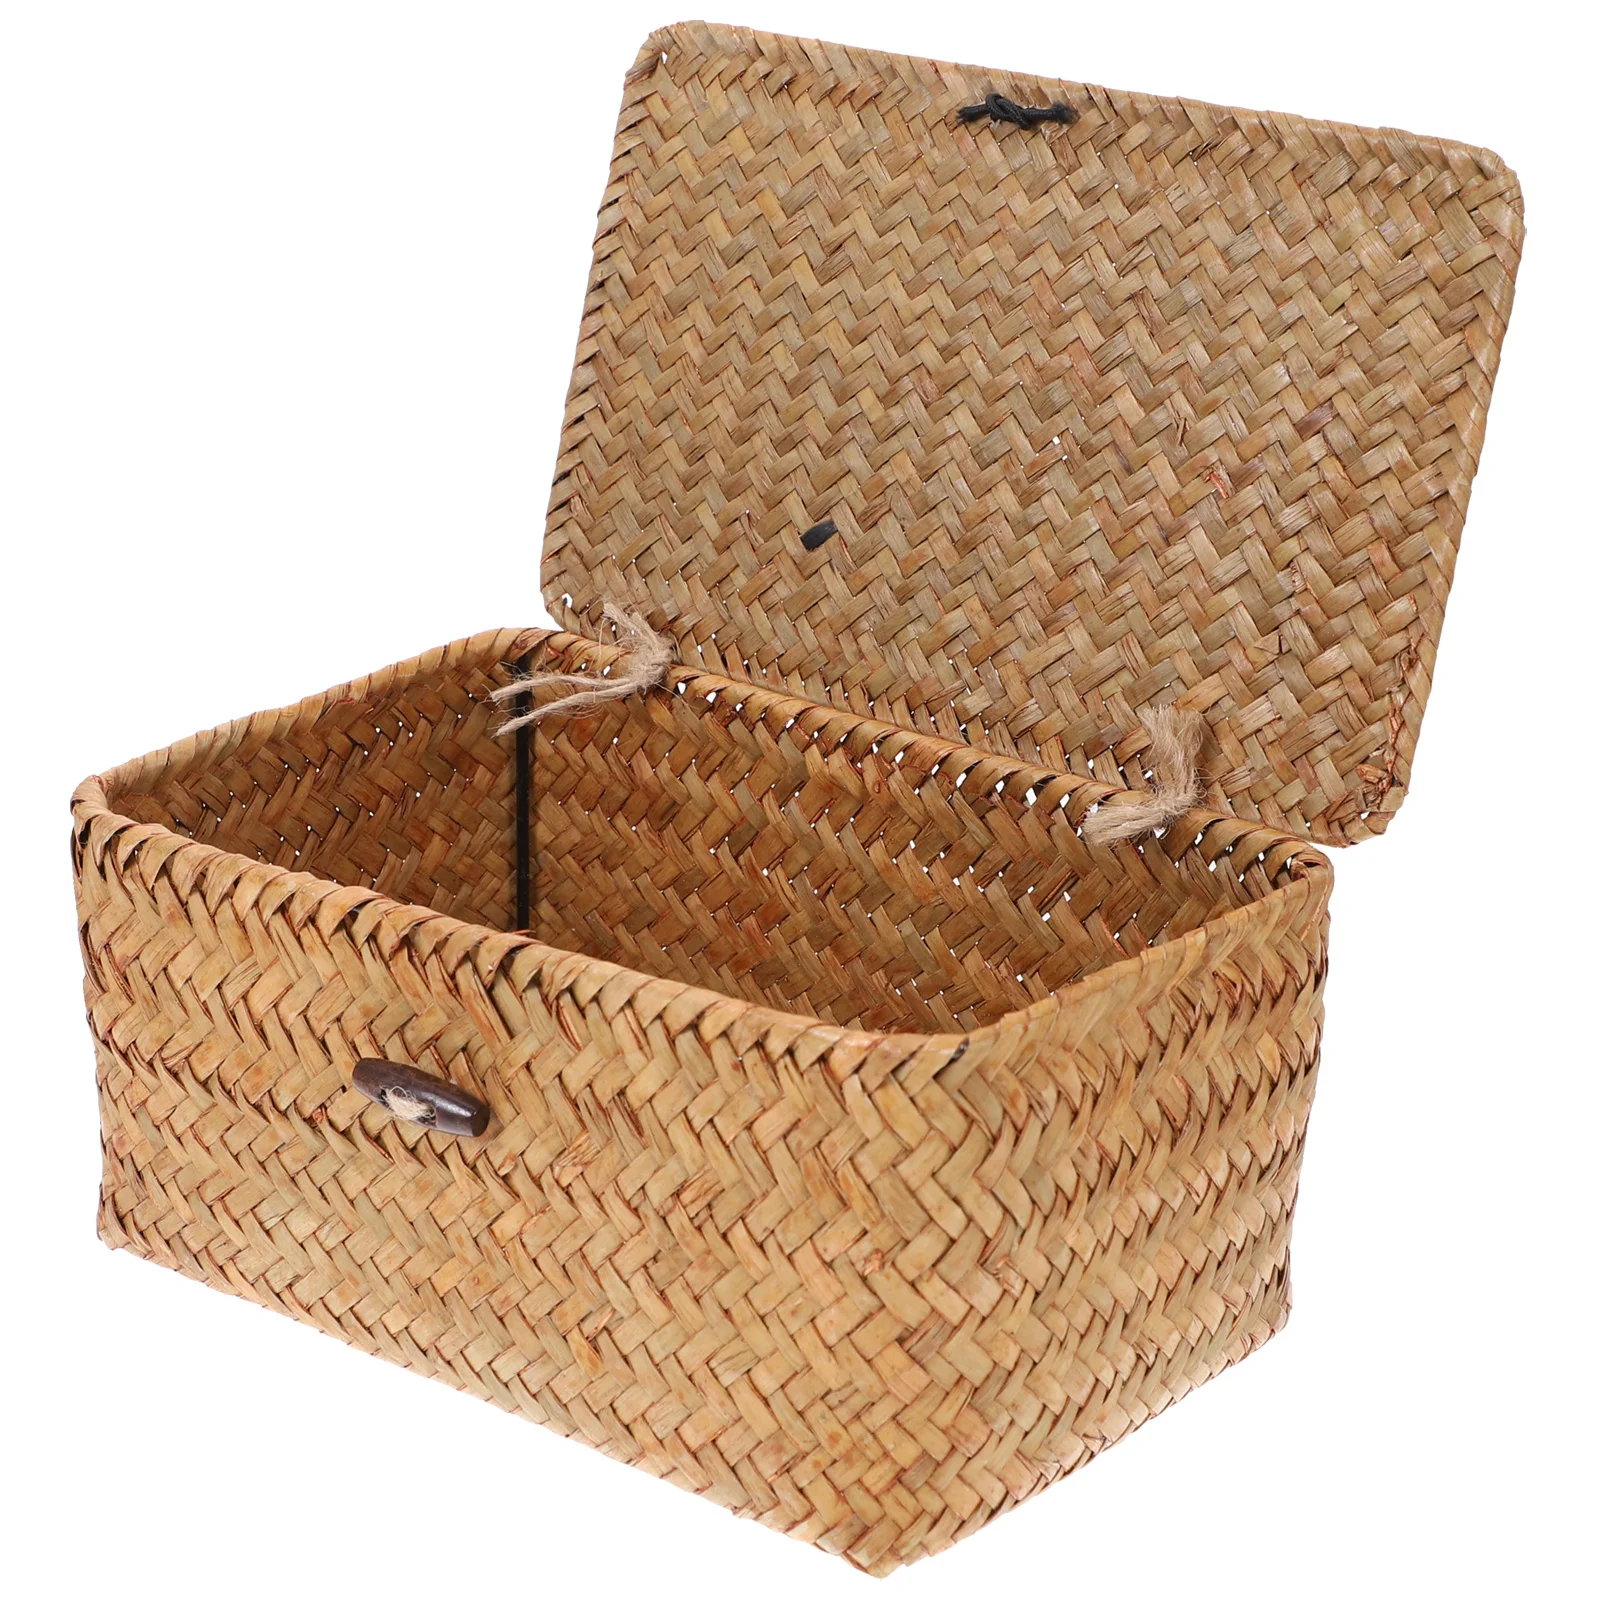 

Basket Storage Baskets Wicker Woven Organizer Lid Box Seaweed Seagrass Sundries Desktop Rattan Shelf Rectangular Organizing